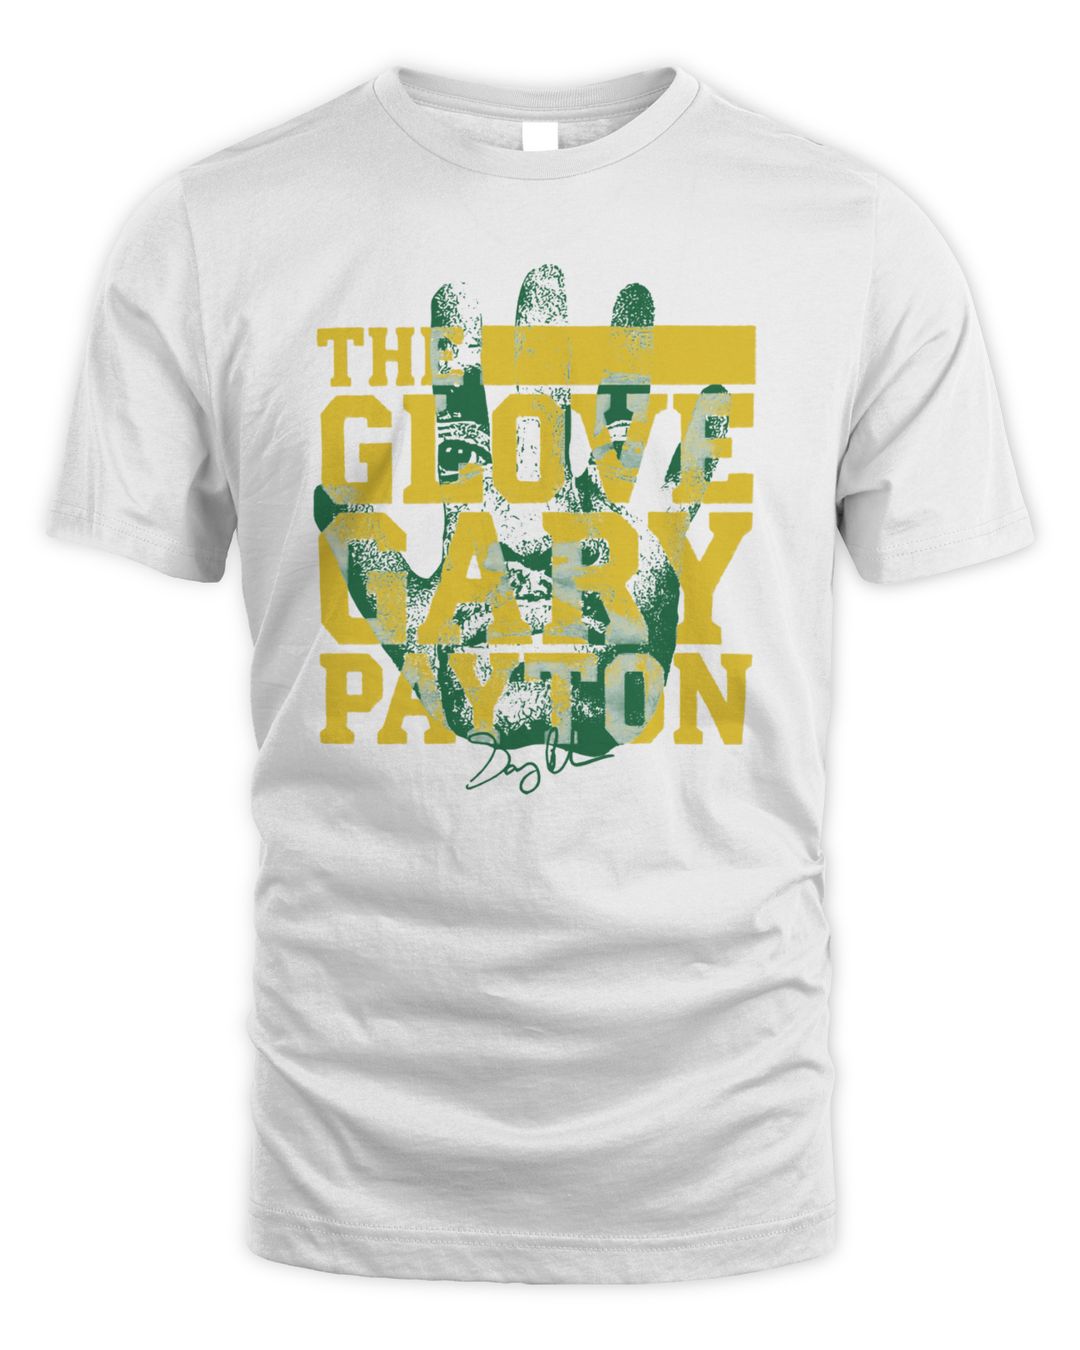 Gary Payton Merch Hand G Shirt